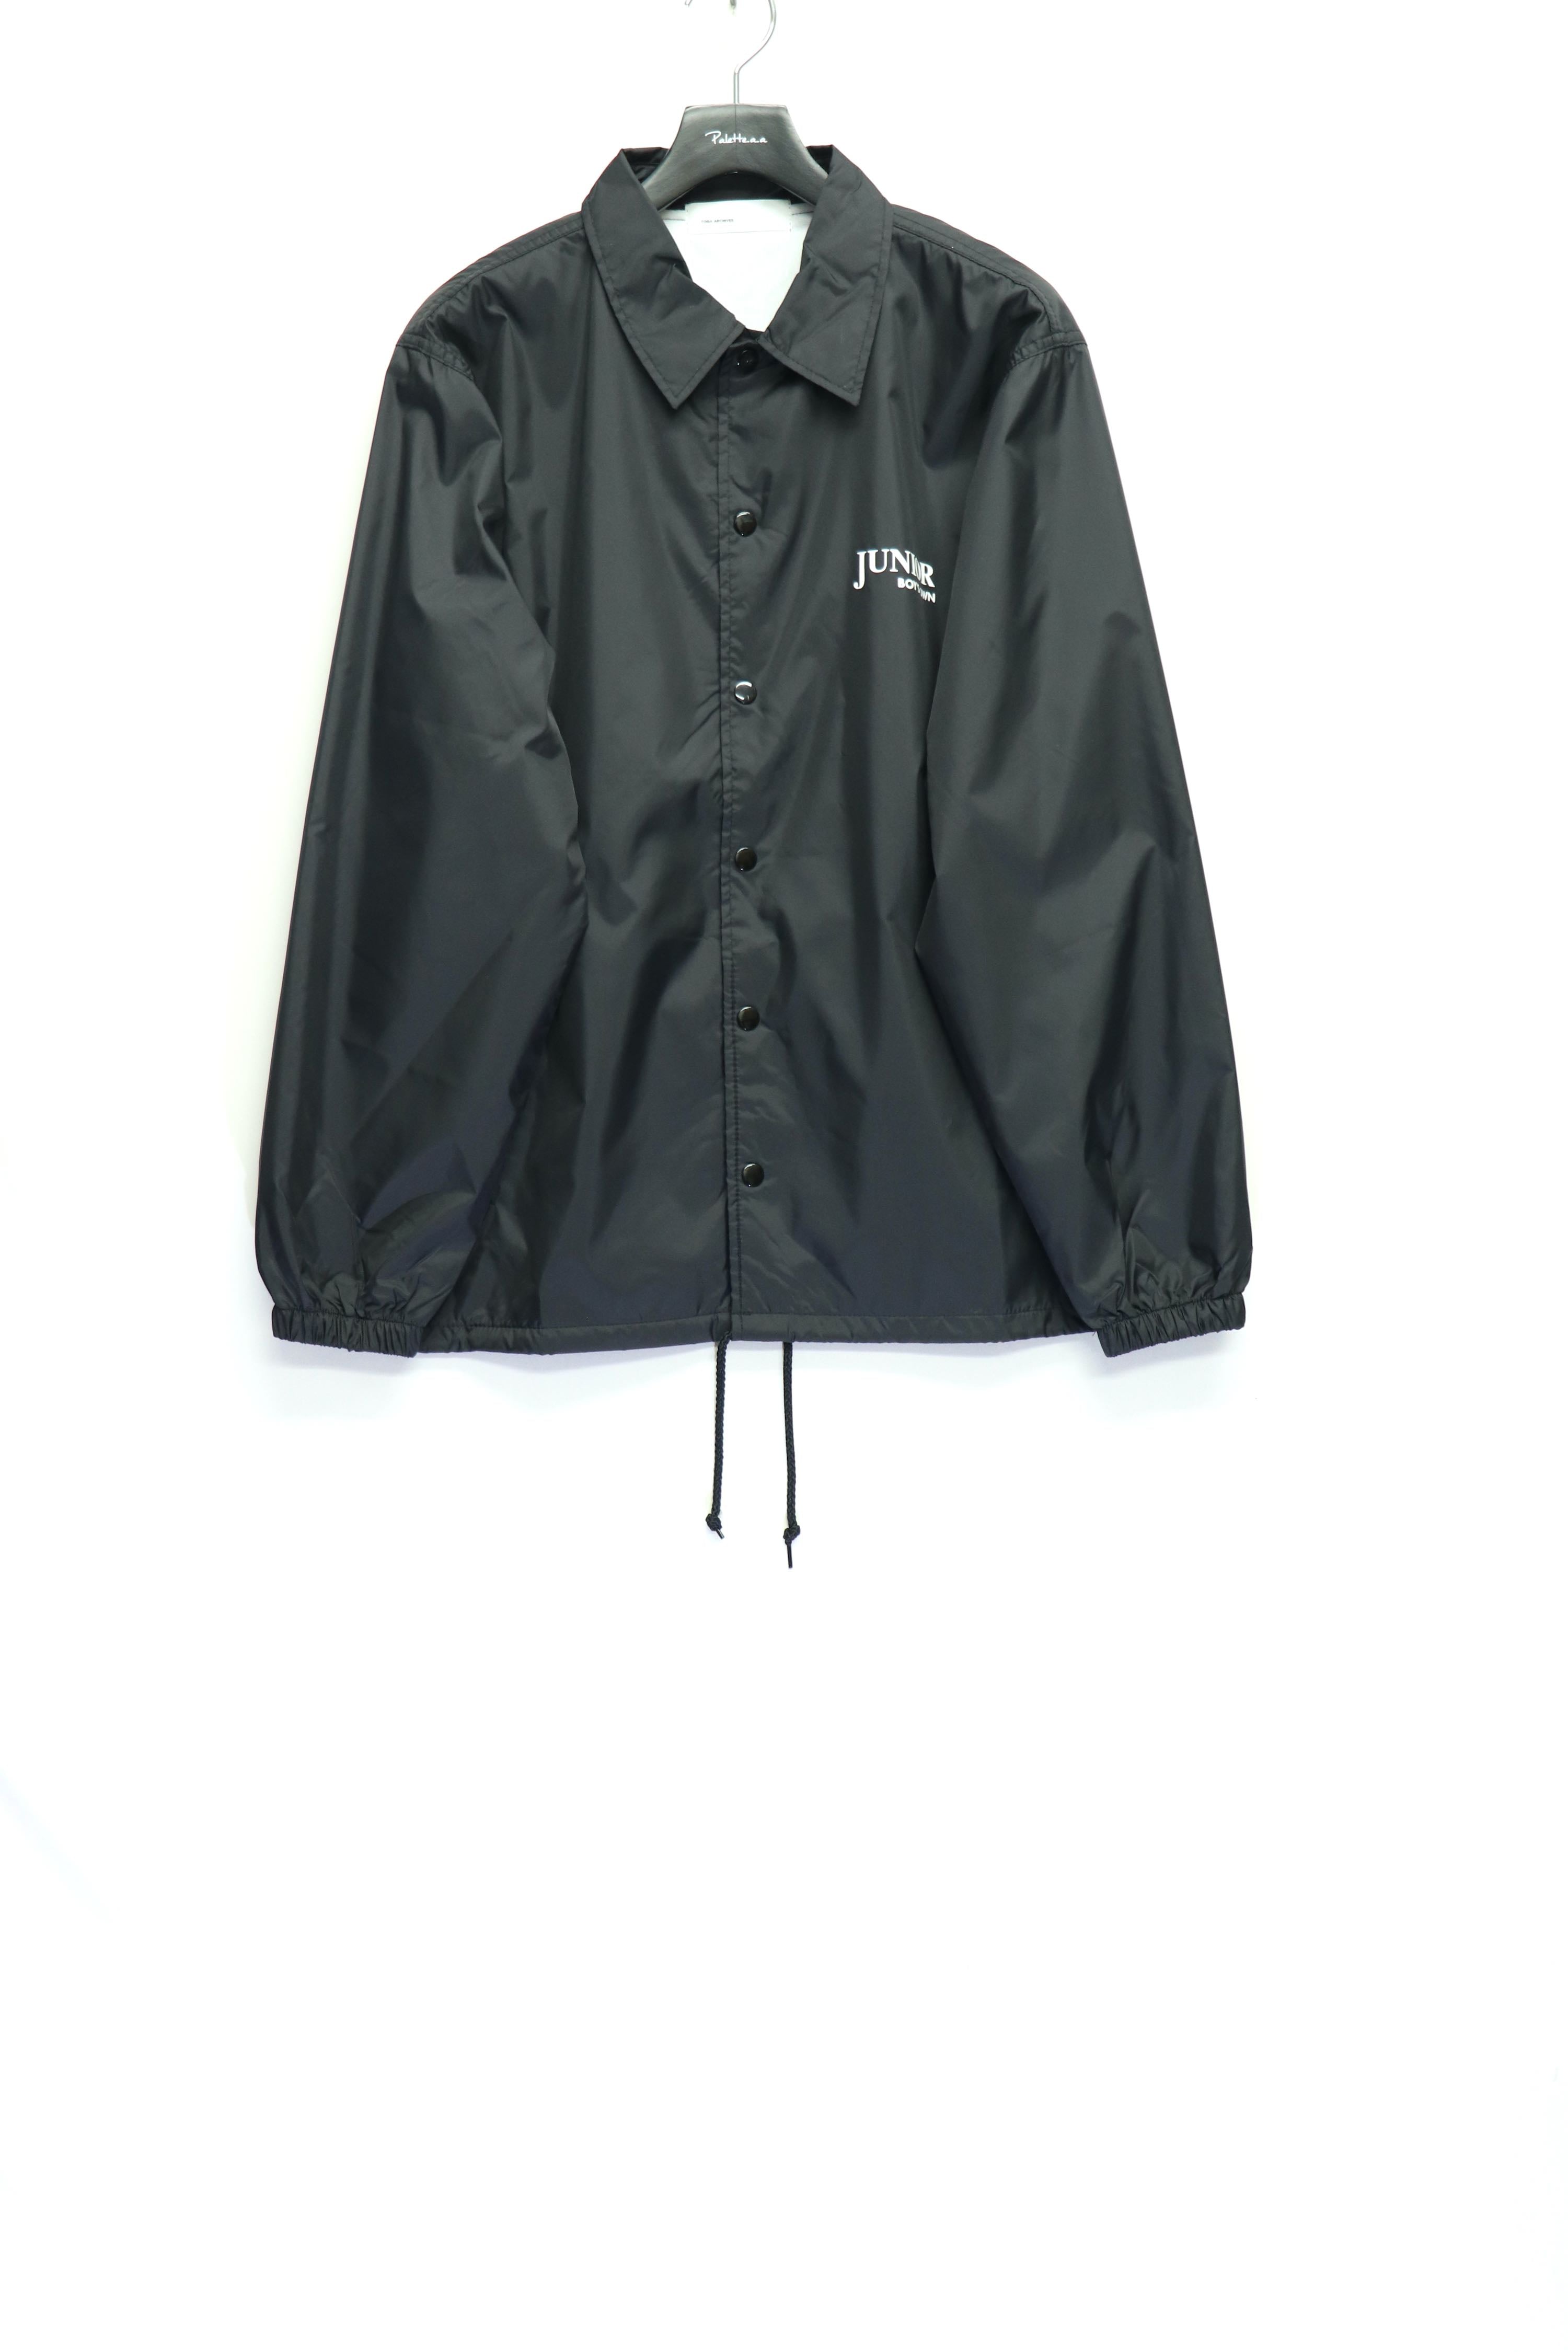 TOGA VIRILIS(トーガ ビリリース)のCoach jacket BOY'S OWN SPの通販